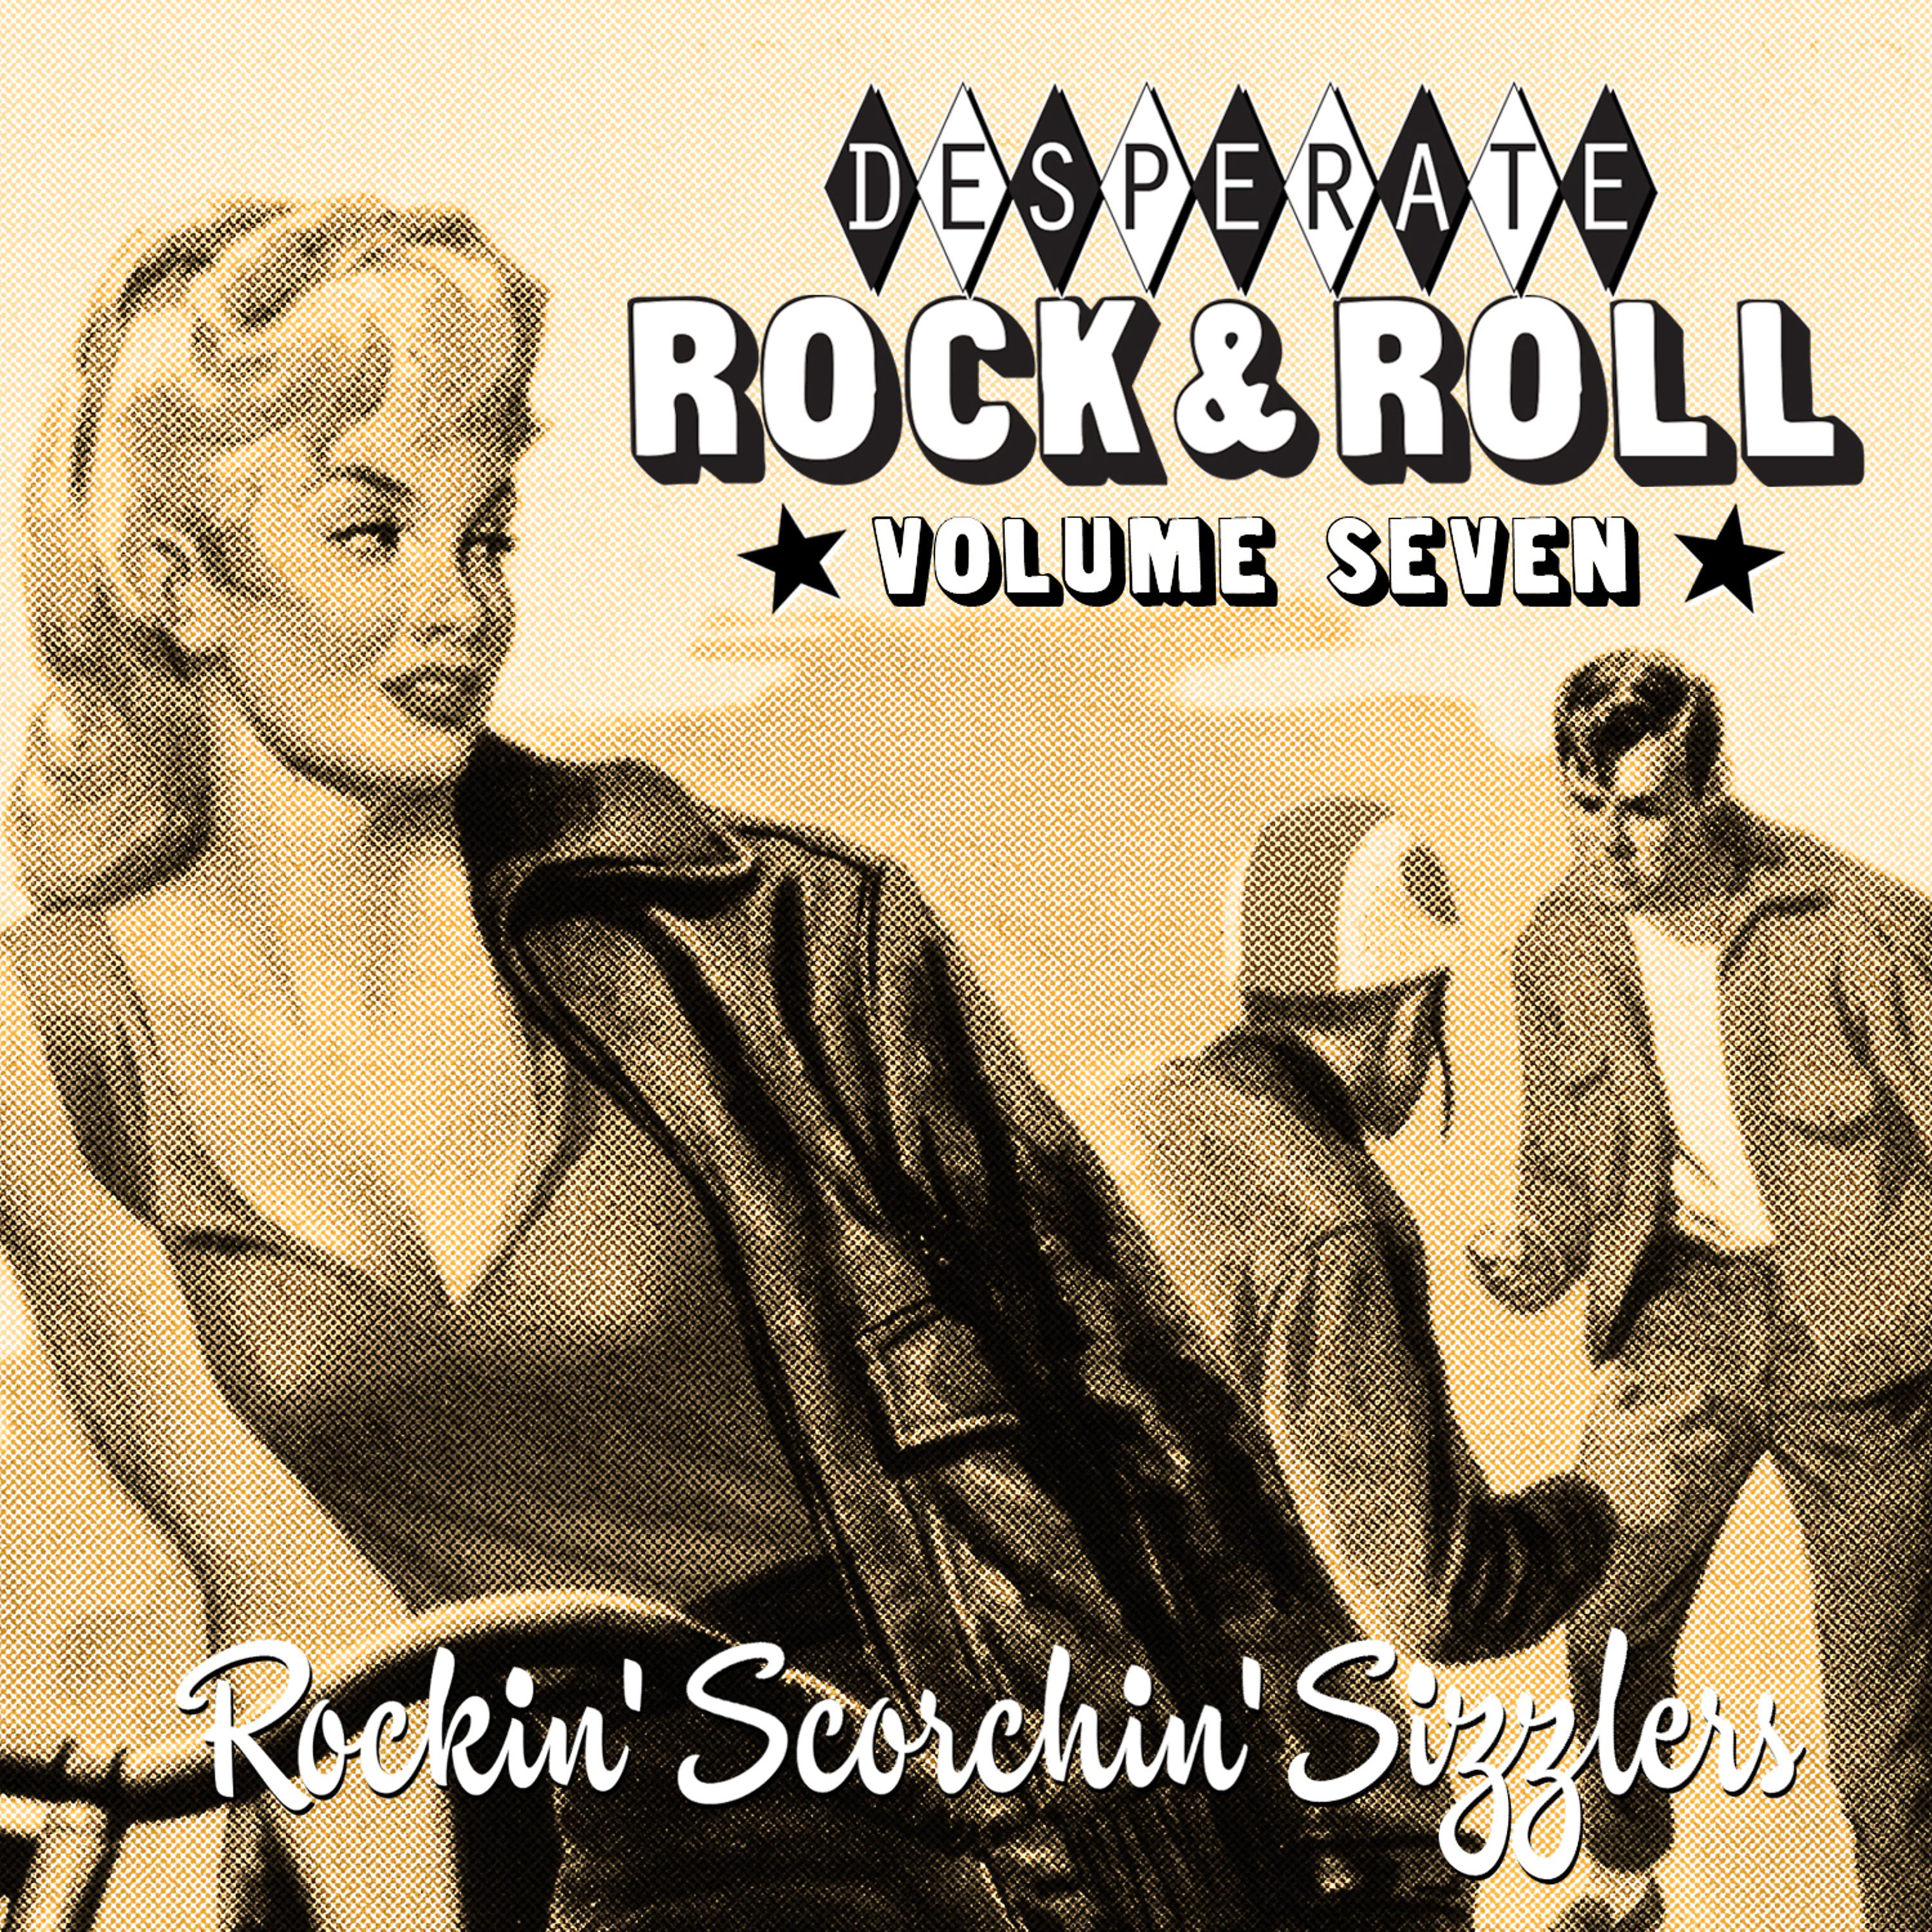 Постер альбома Desperate Rock'n'roll Vol. 7, Rockin' Scorchin' Sizzlers